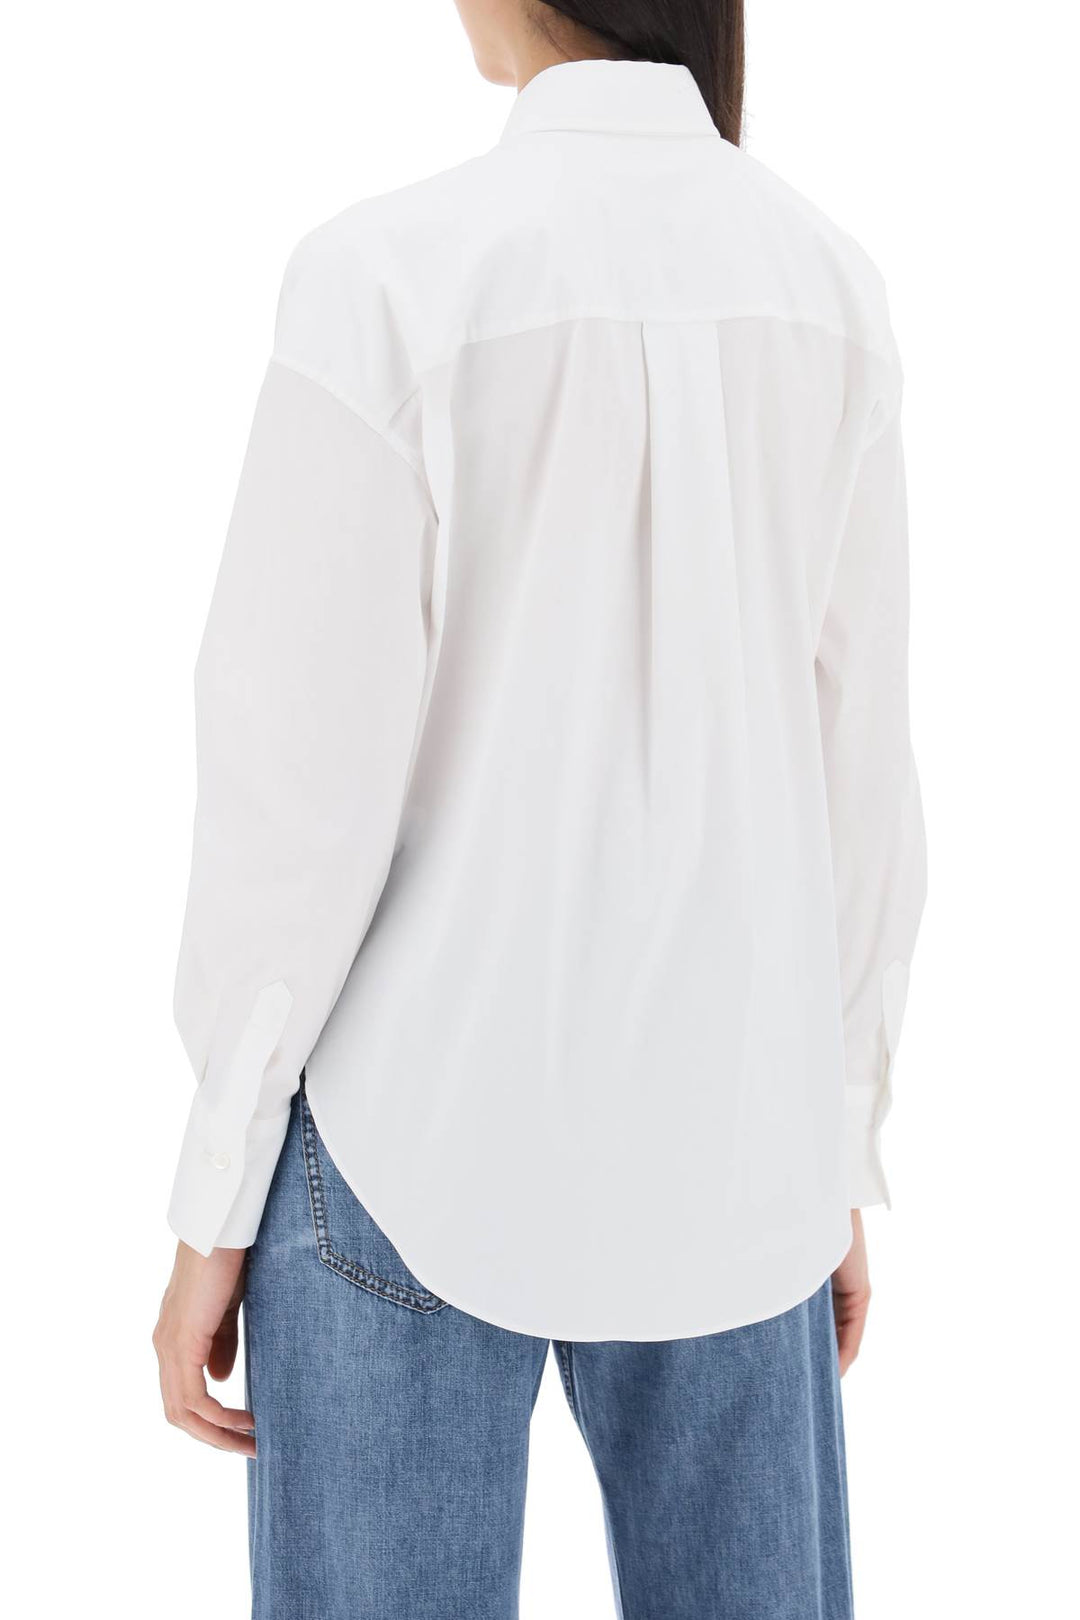 Brunello Cucinelli Shirt With Jewel Detail   Bianco